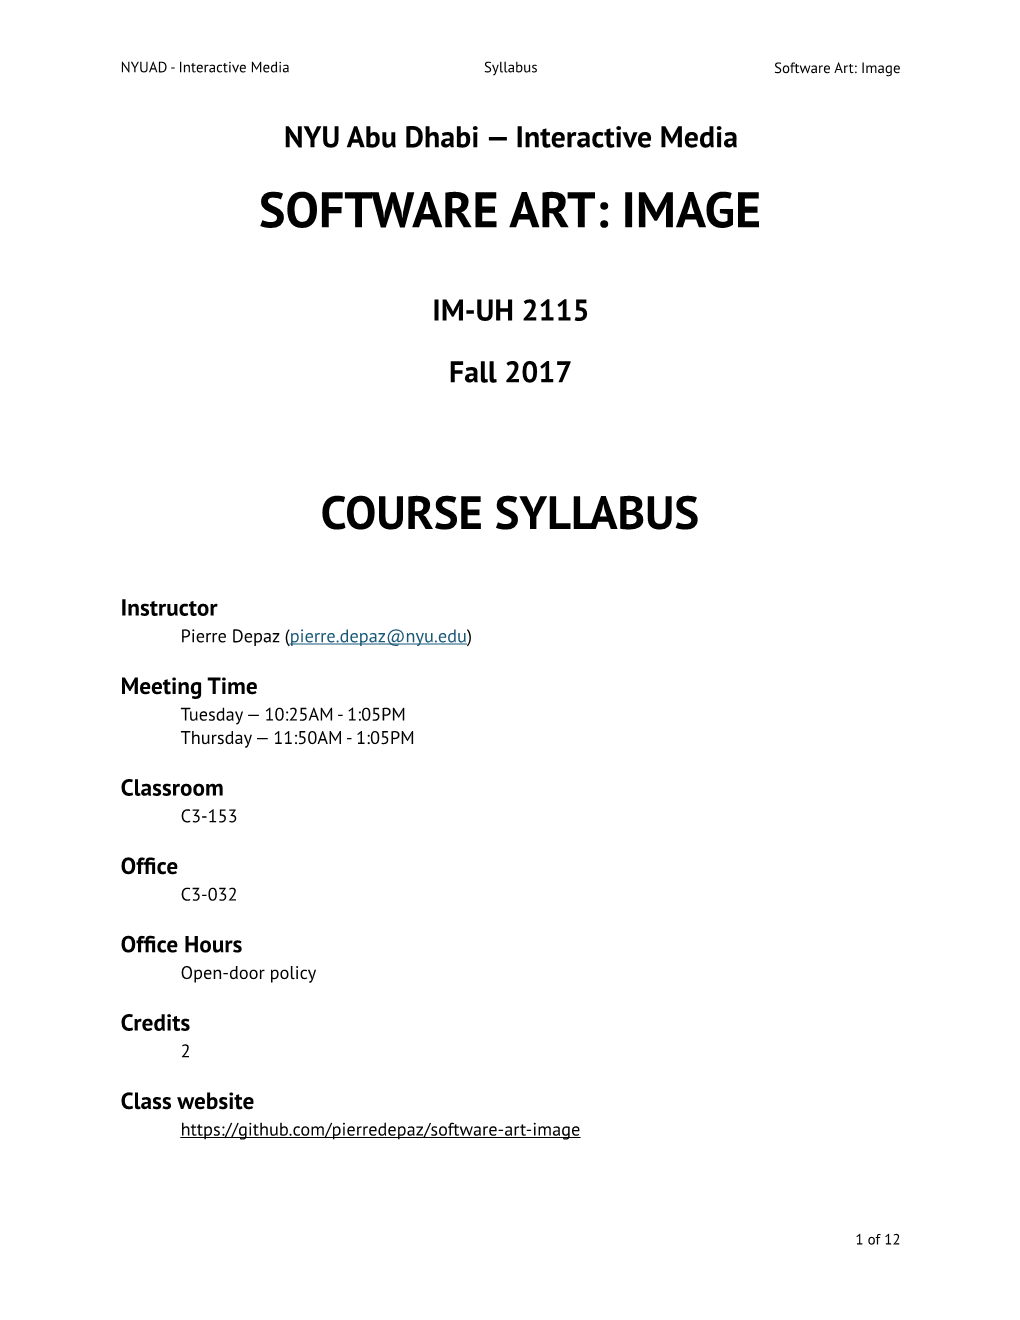 Software Art: Image